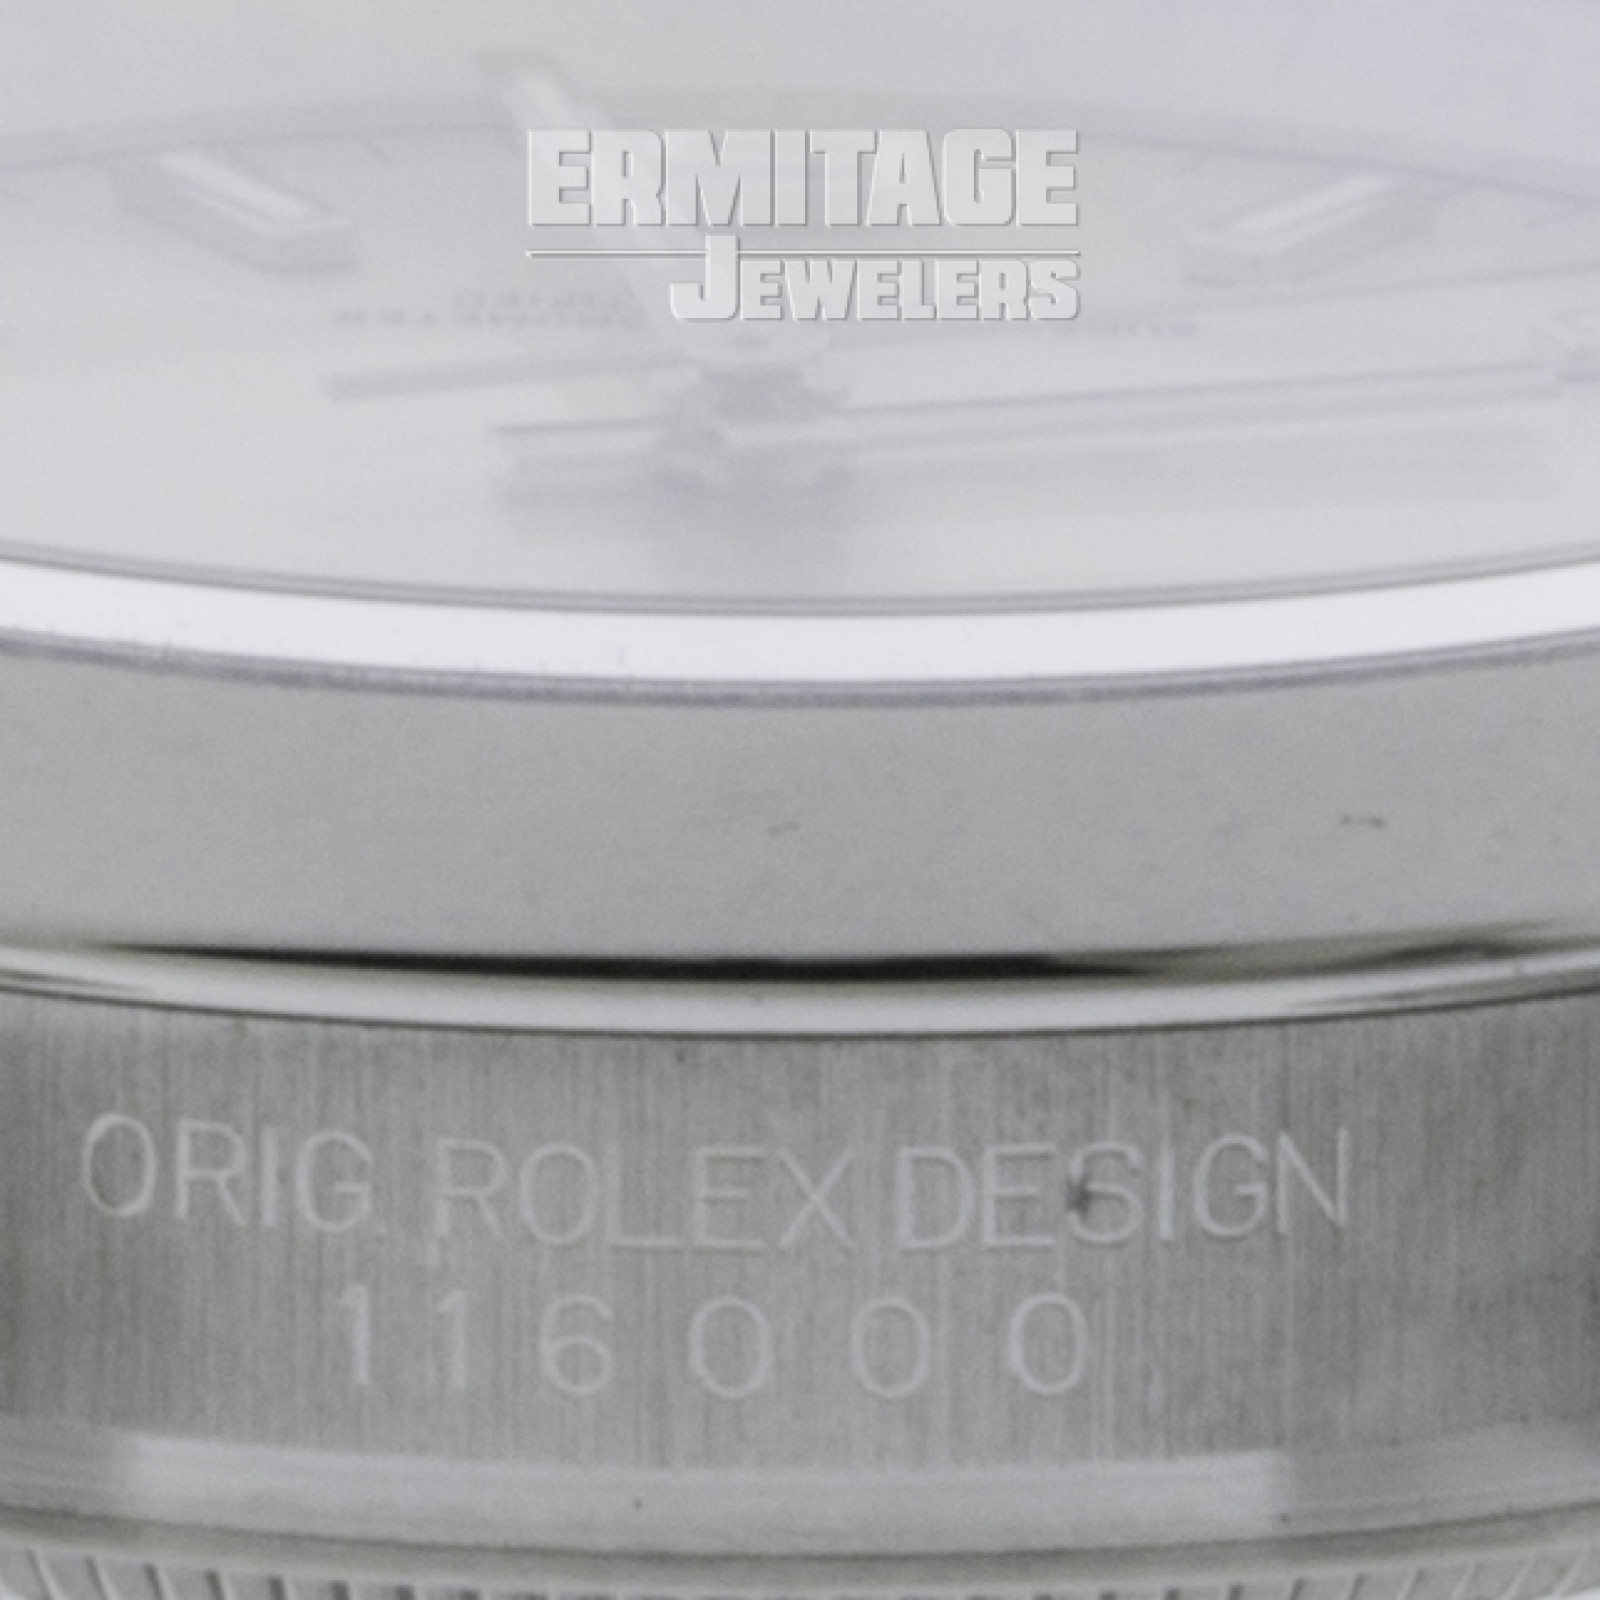 2015 Steel Rolex Oyster Perpetual Ref. 116000